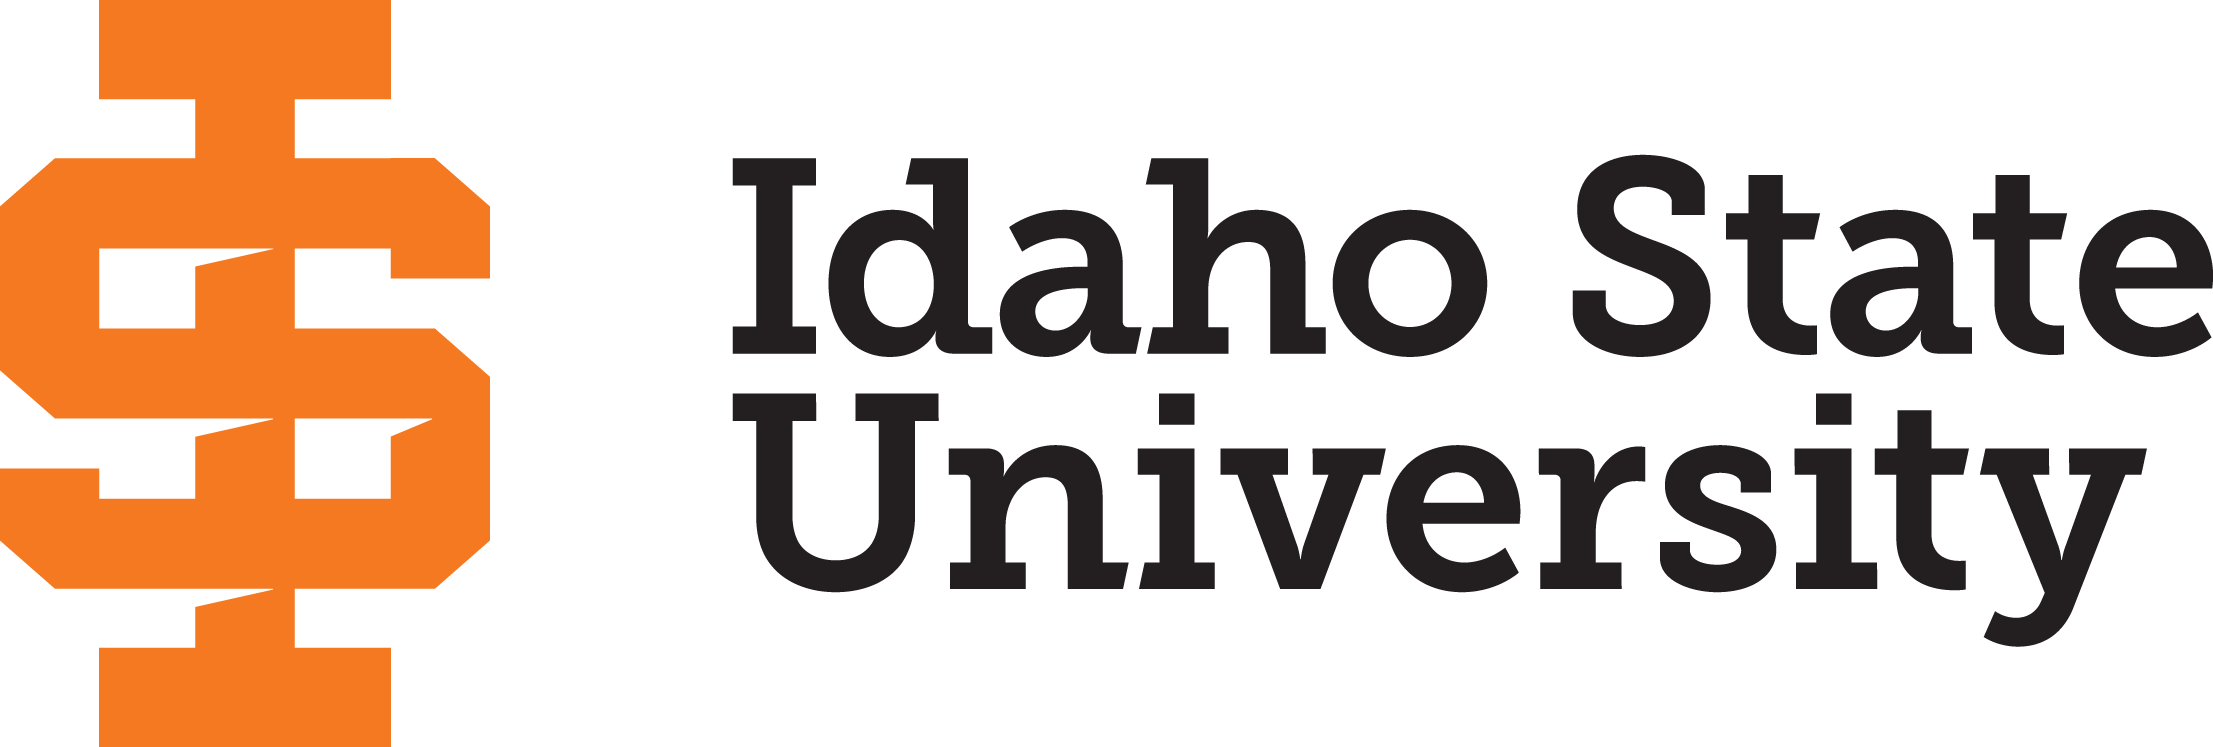 Idaho State University appears next to an orange 